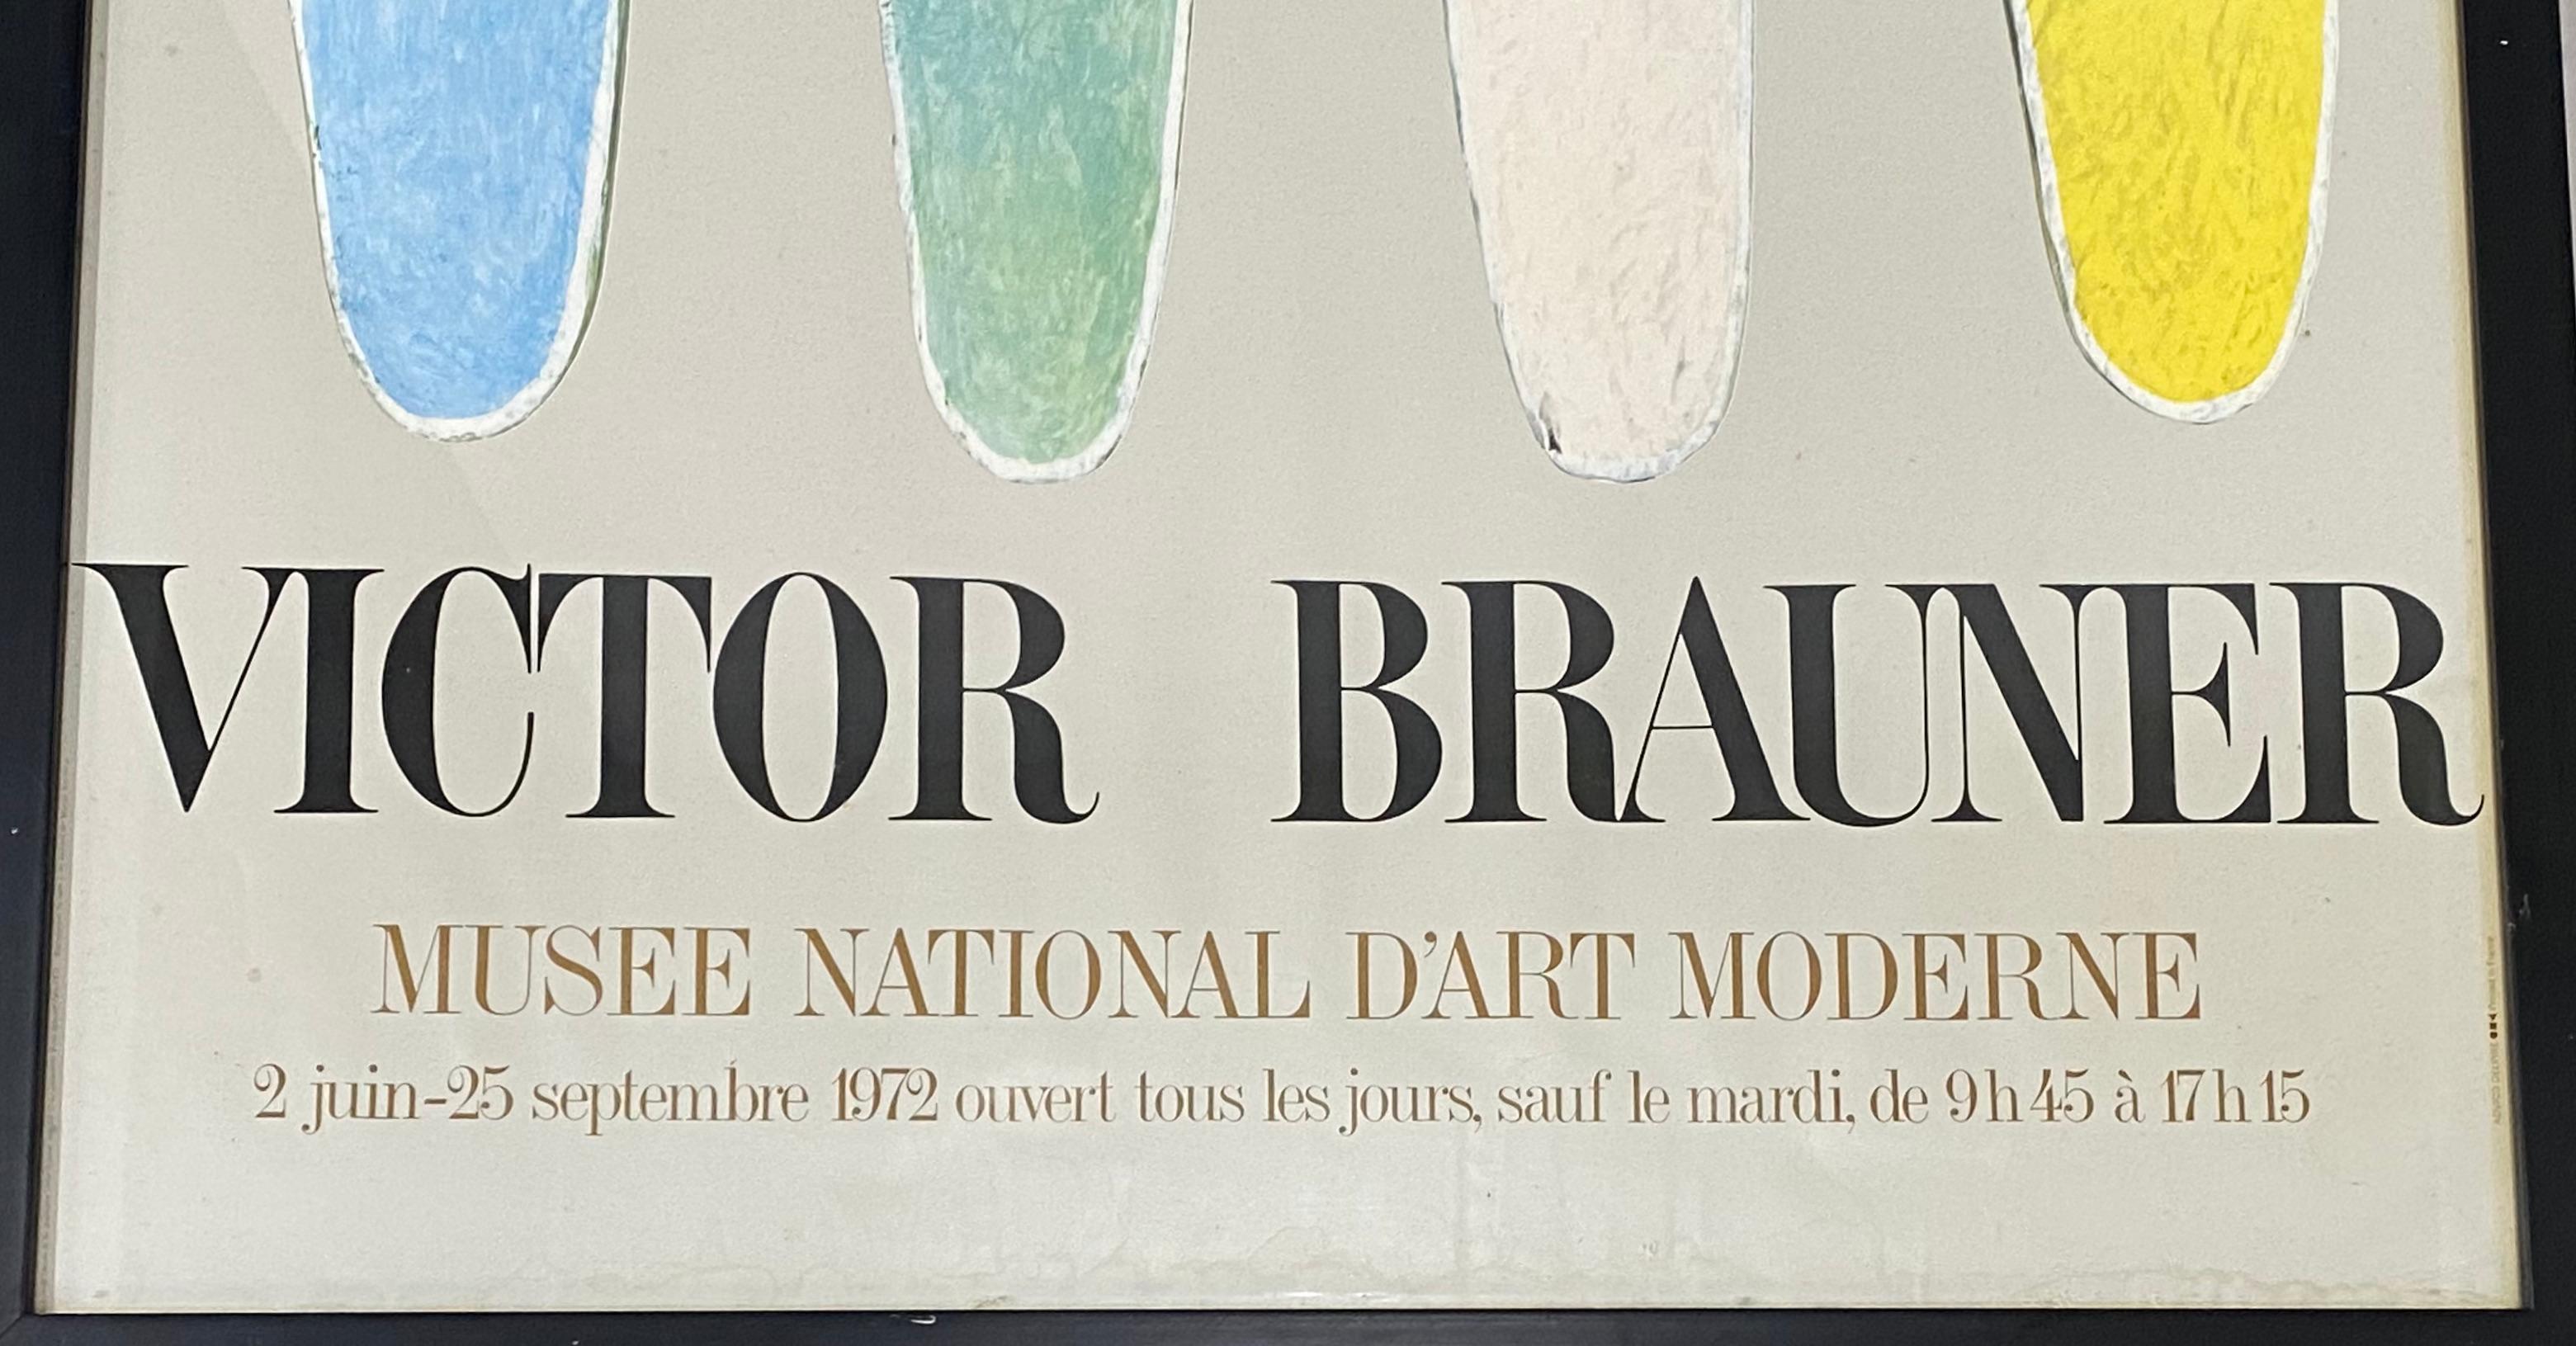 Victor Brauner Exhibition Poster Framed C.1972

Poster dimensions 19.5